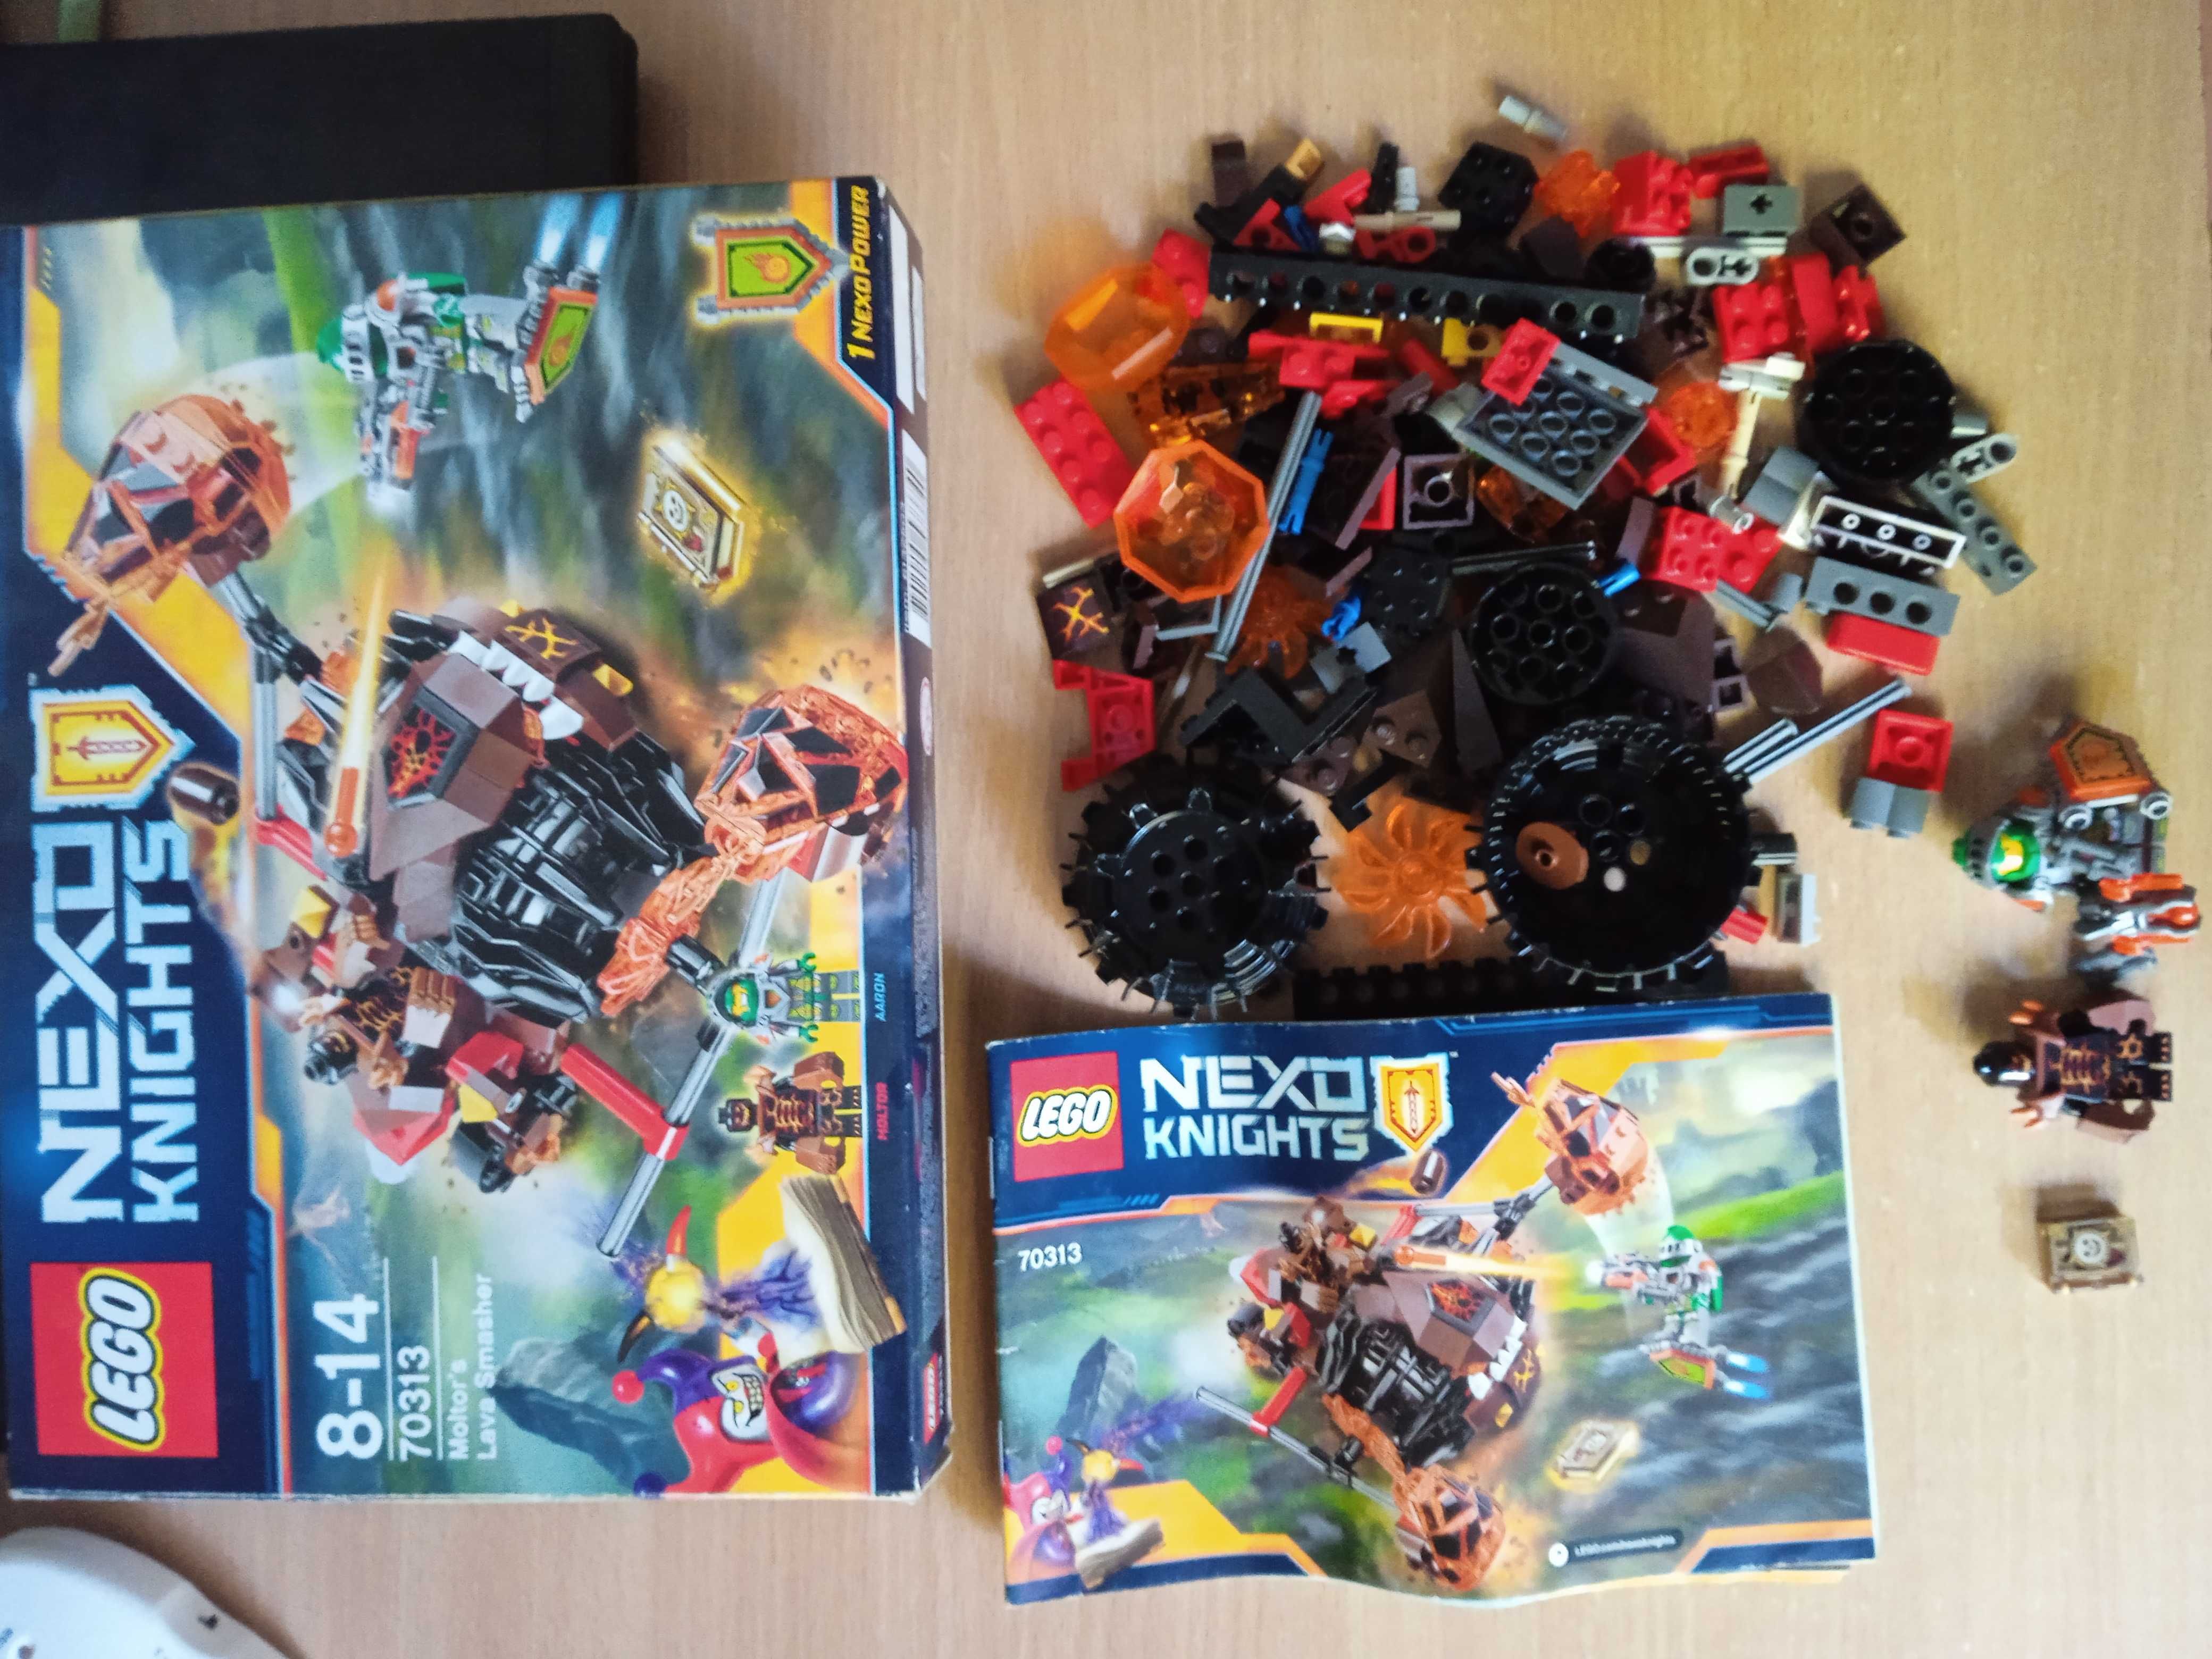 Lego Nexo Knights - 70313 Moltor's Lava Smasher